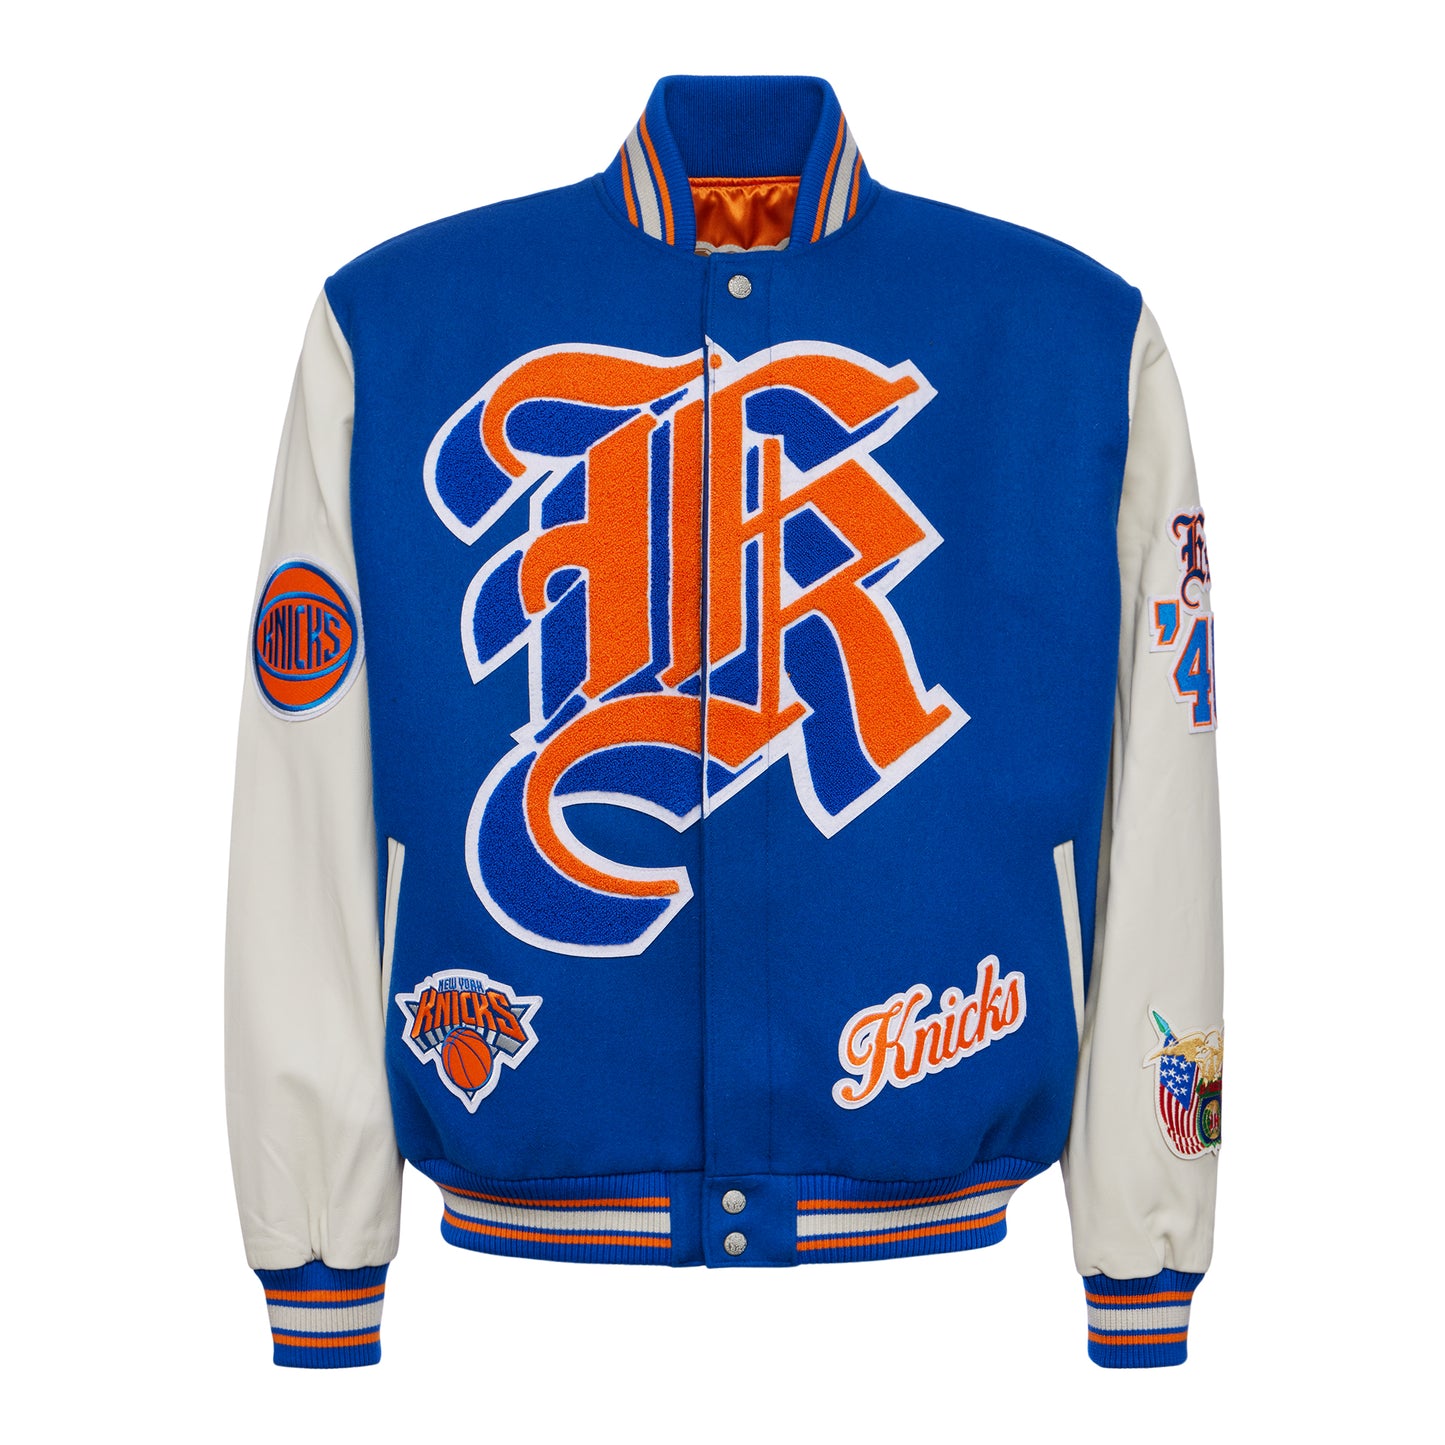 New York Knicks White Satin Jacket - Buy Now